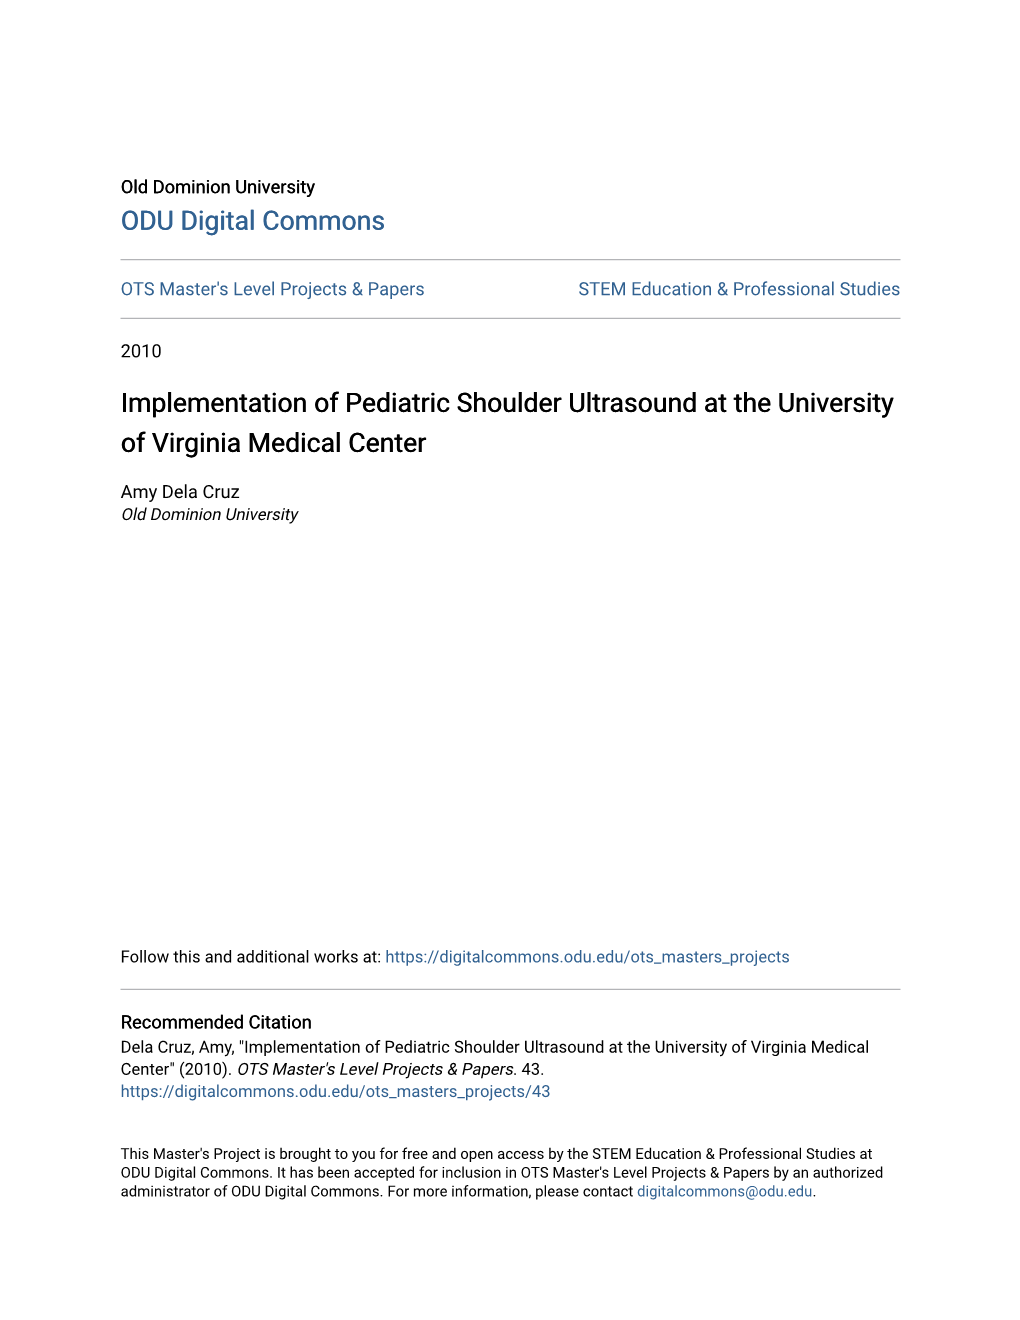 Implementation of Pediatric Shoulder Ultrasound at the University of Virginia Medical Center